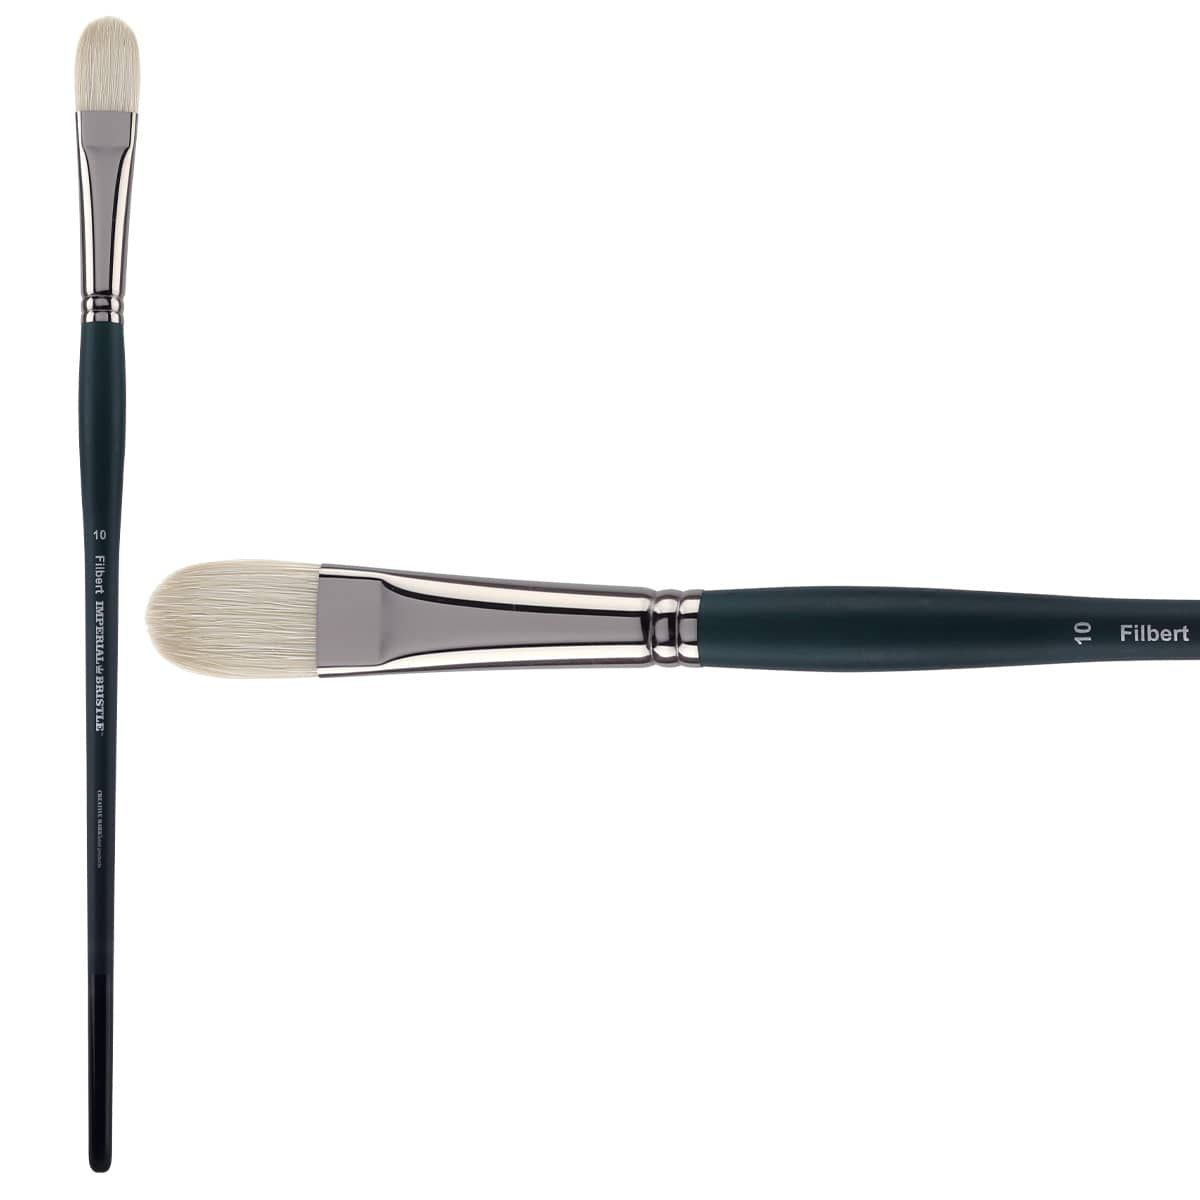 Imperial Professional Chungking Hog Bristle Brush, Filbert Size #10